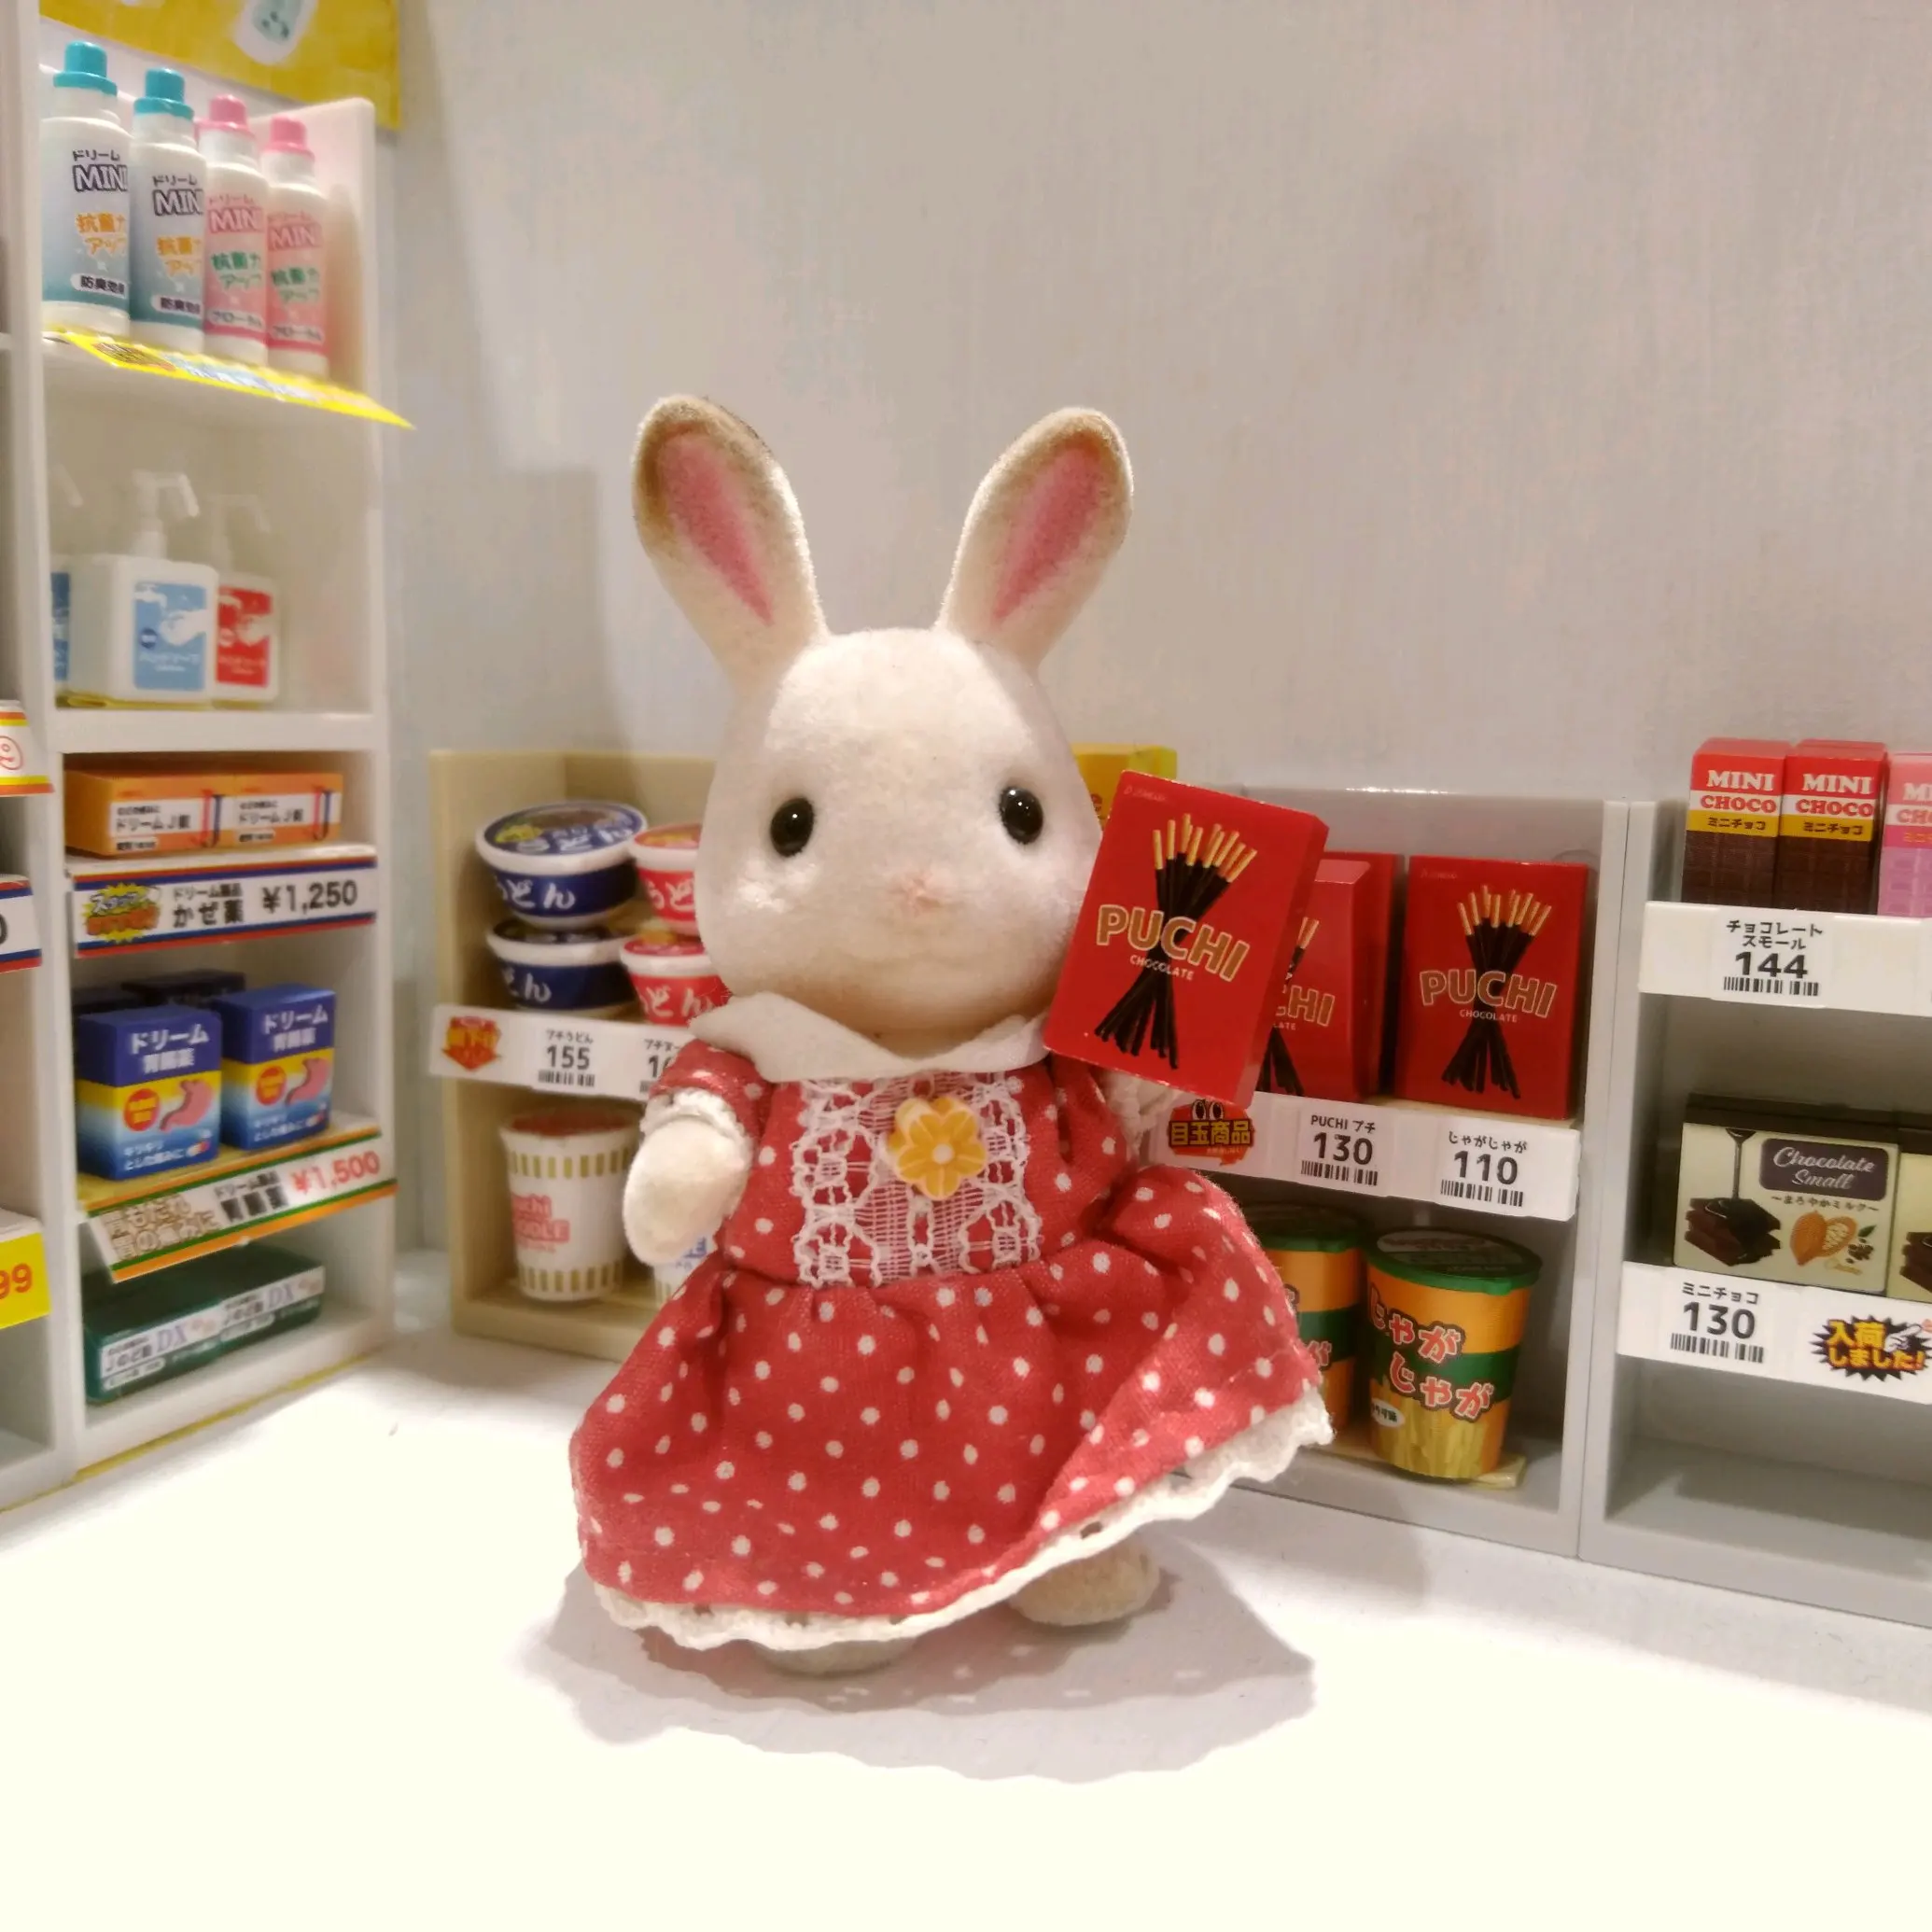 J. Sueño gashapon juguetes 1/12 bjd blythe ob11 figma gsc figura snack de la tienda estante de la mascota de la casa de muñecas miniaturas Imagen 2